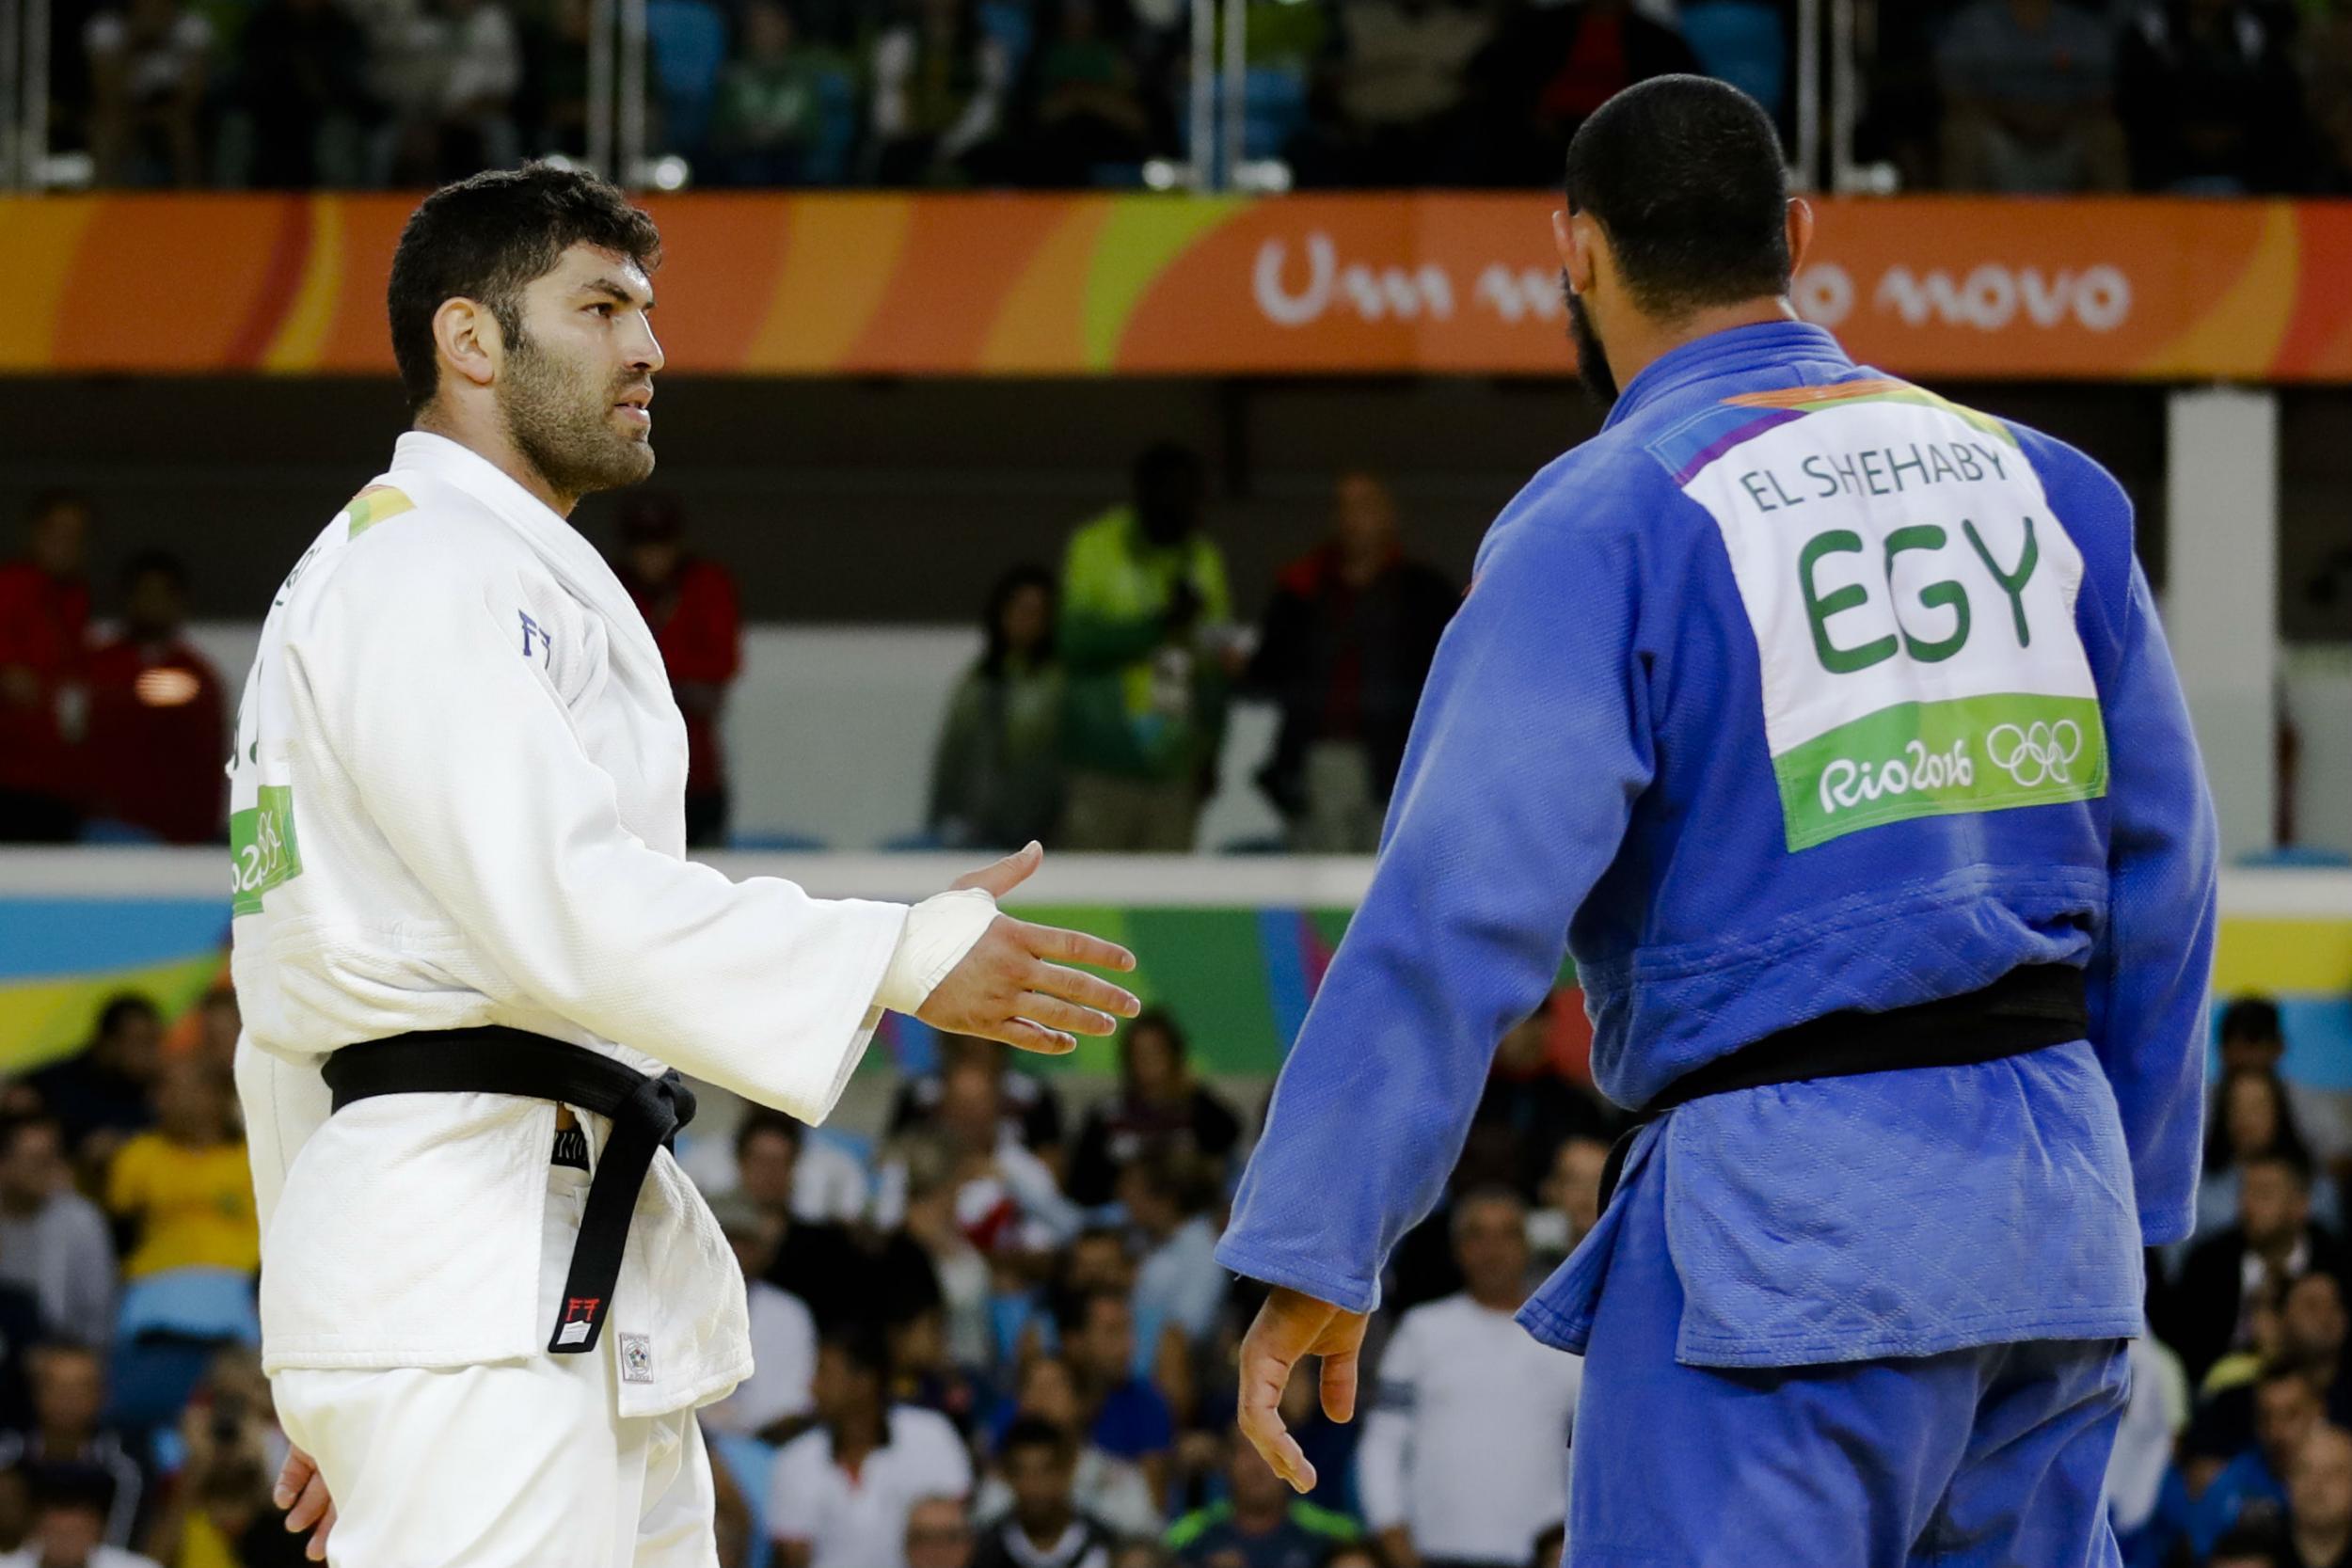 Rio 2016: Egyptian judoka sent home after refusing to shake hand of Israeli opponent